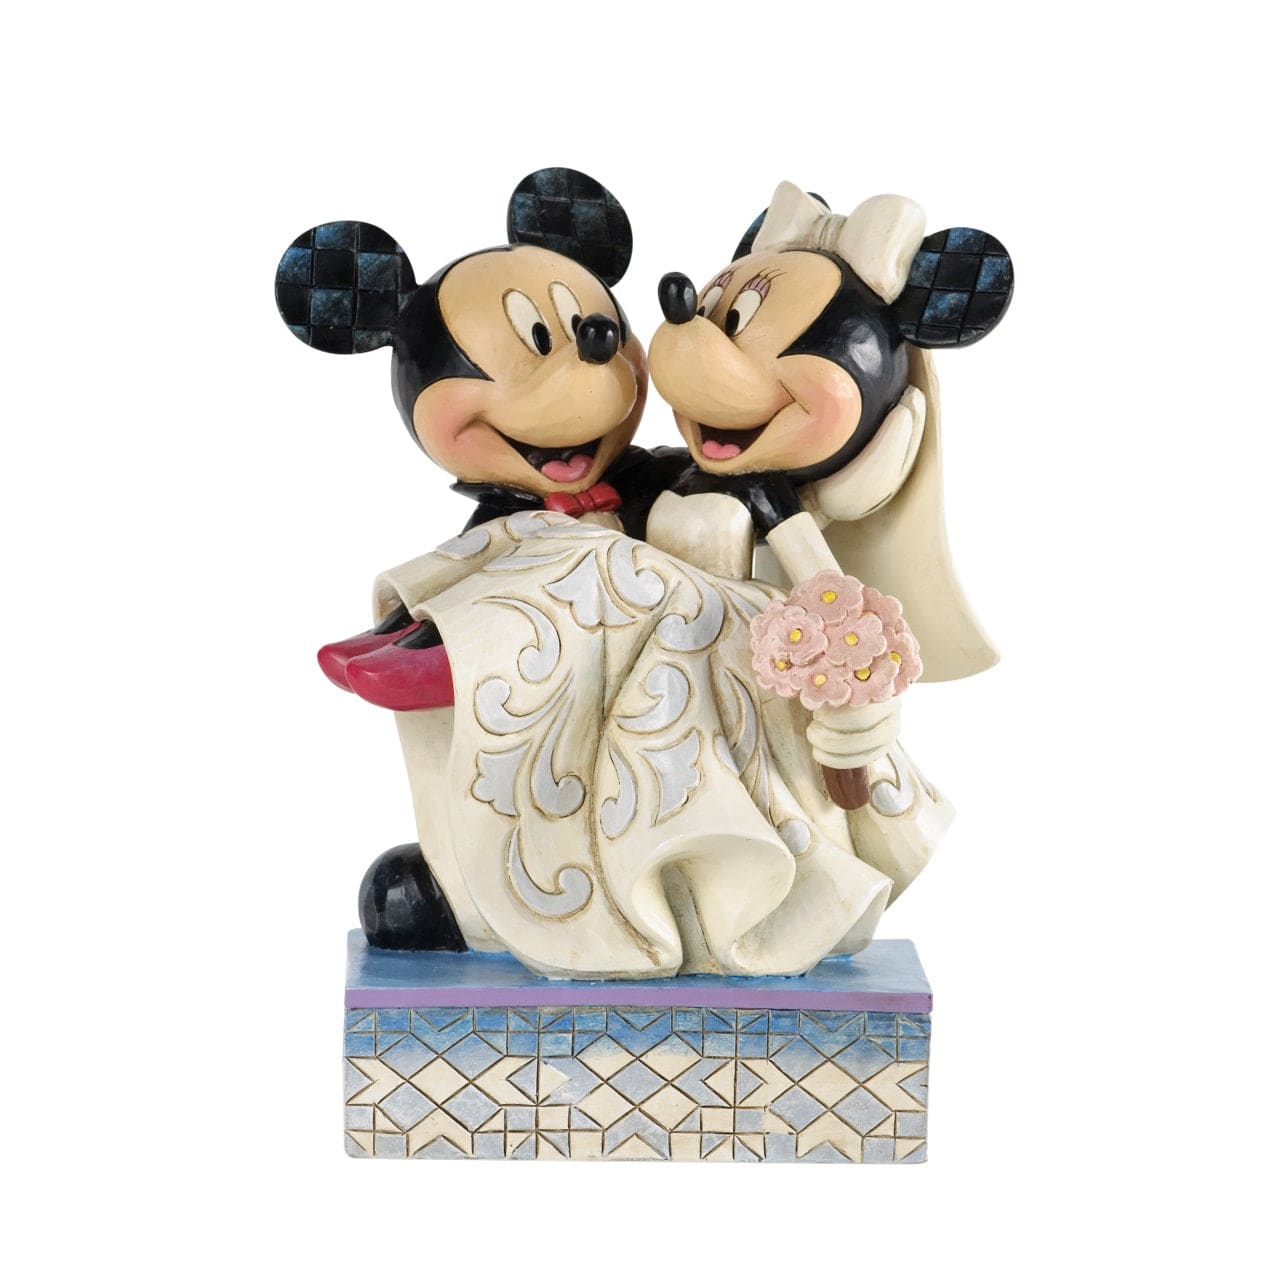 Enesco Disney Ornament Disney Traditions Figurine - Congratulations - Mickey & Minnie Mouse